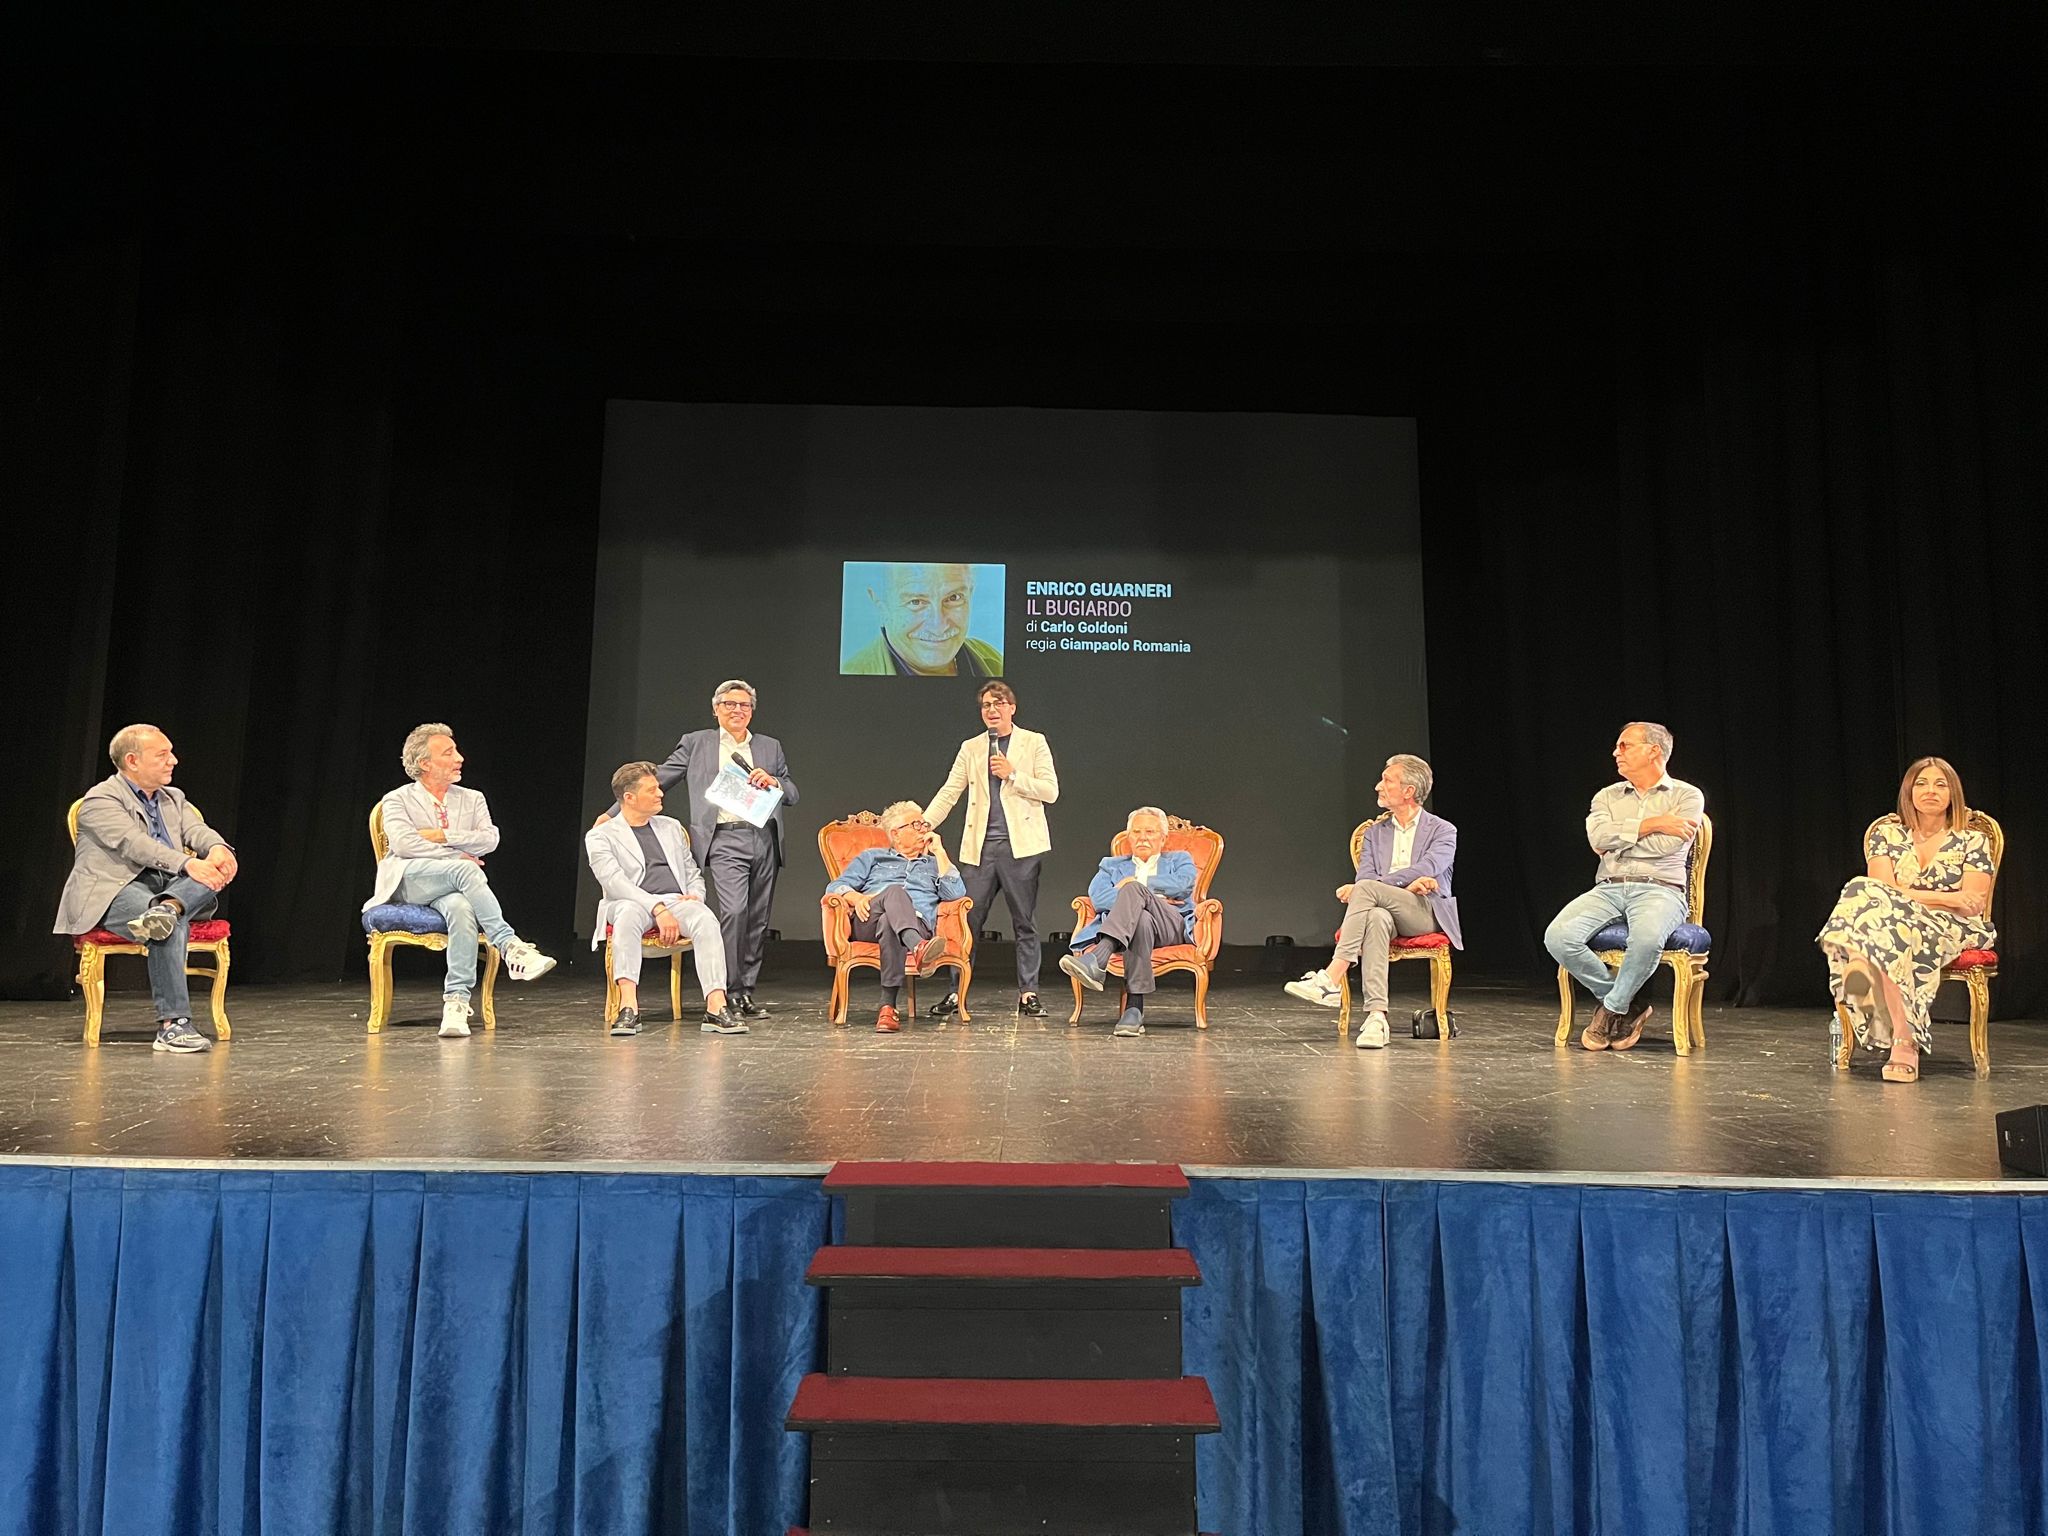 Ferzan Ozpetek, Claudio Bisio, Edoardo Leo, Giuseppe Zeno: presentata la  stagione di prosa Turi Ferro al teatro Abc - Catania News